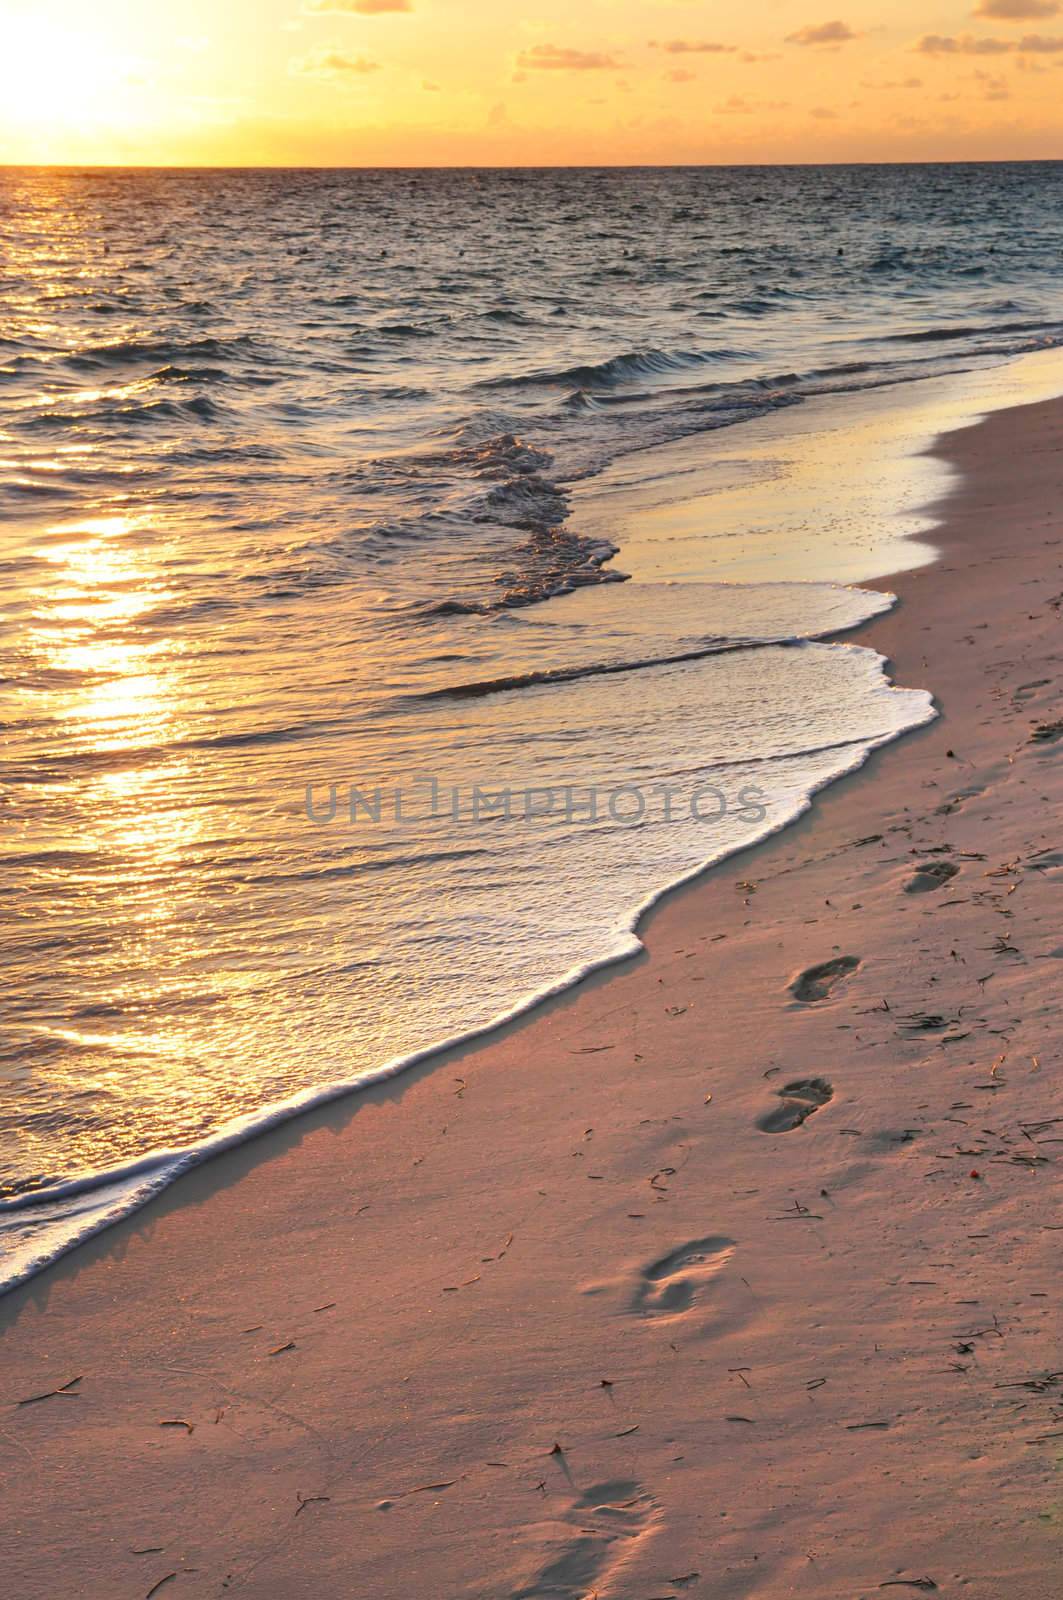 Footprints on sandy beach at sunrise by elenathewise